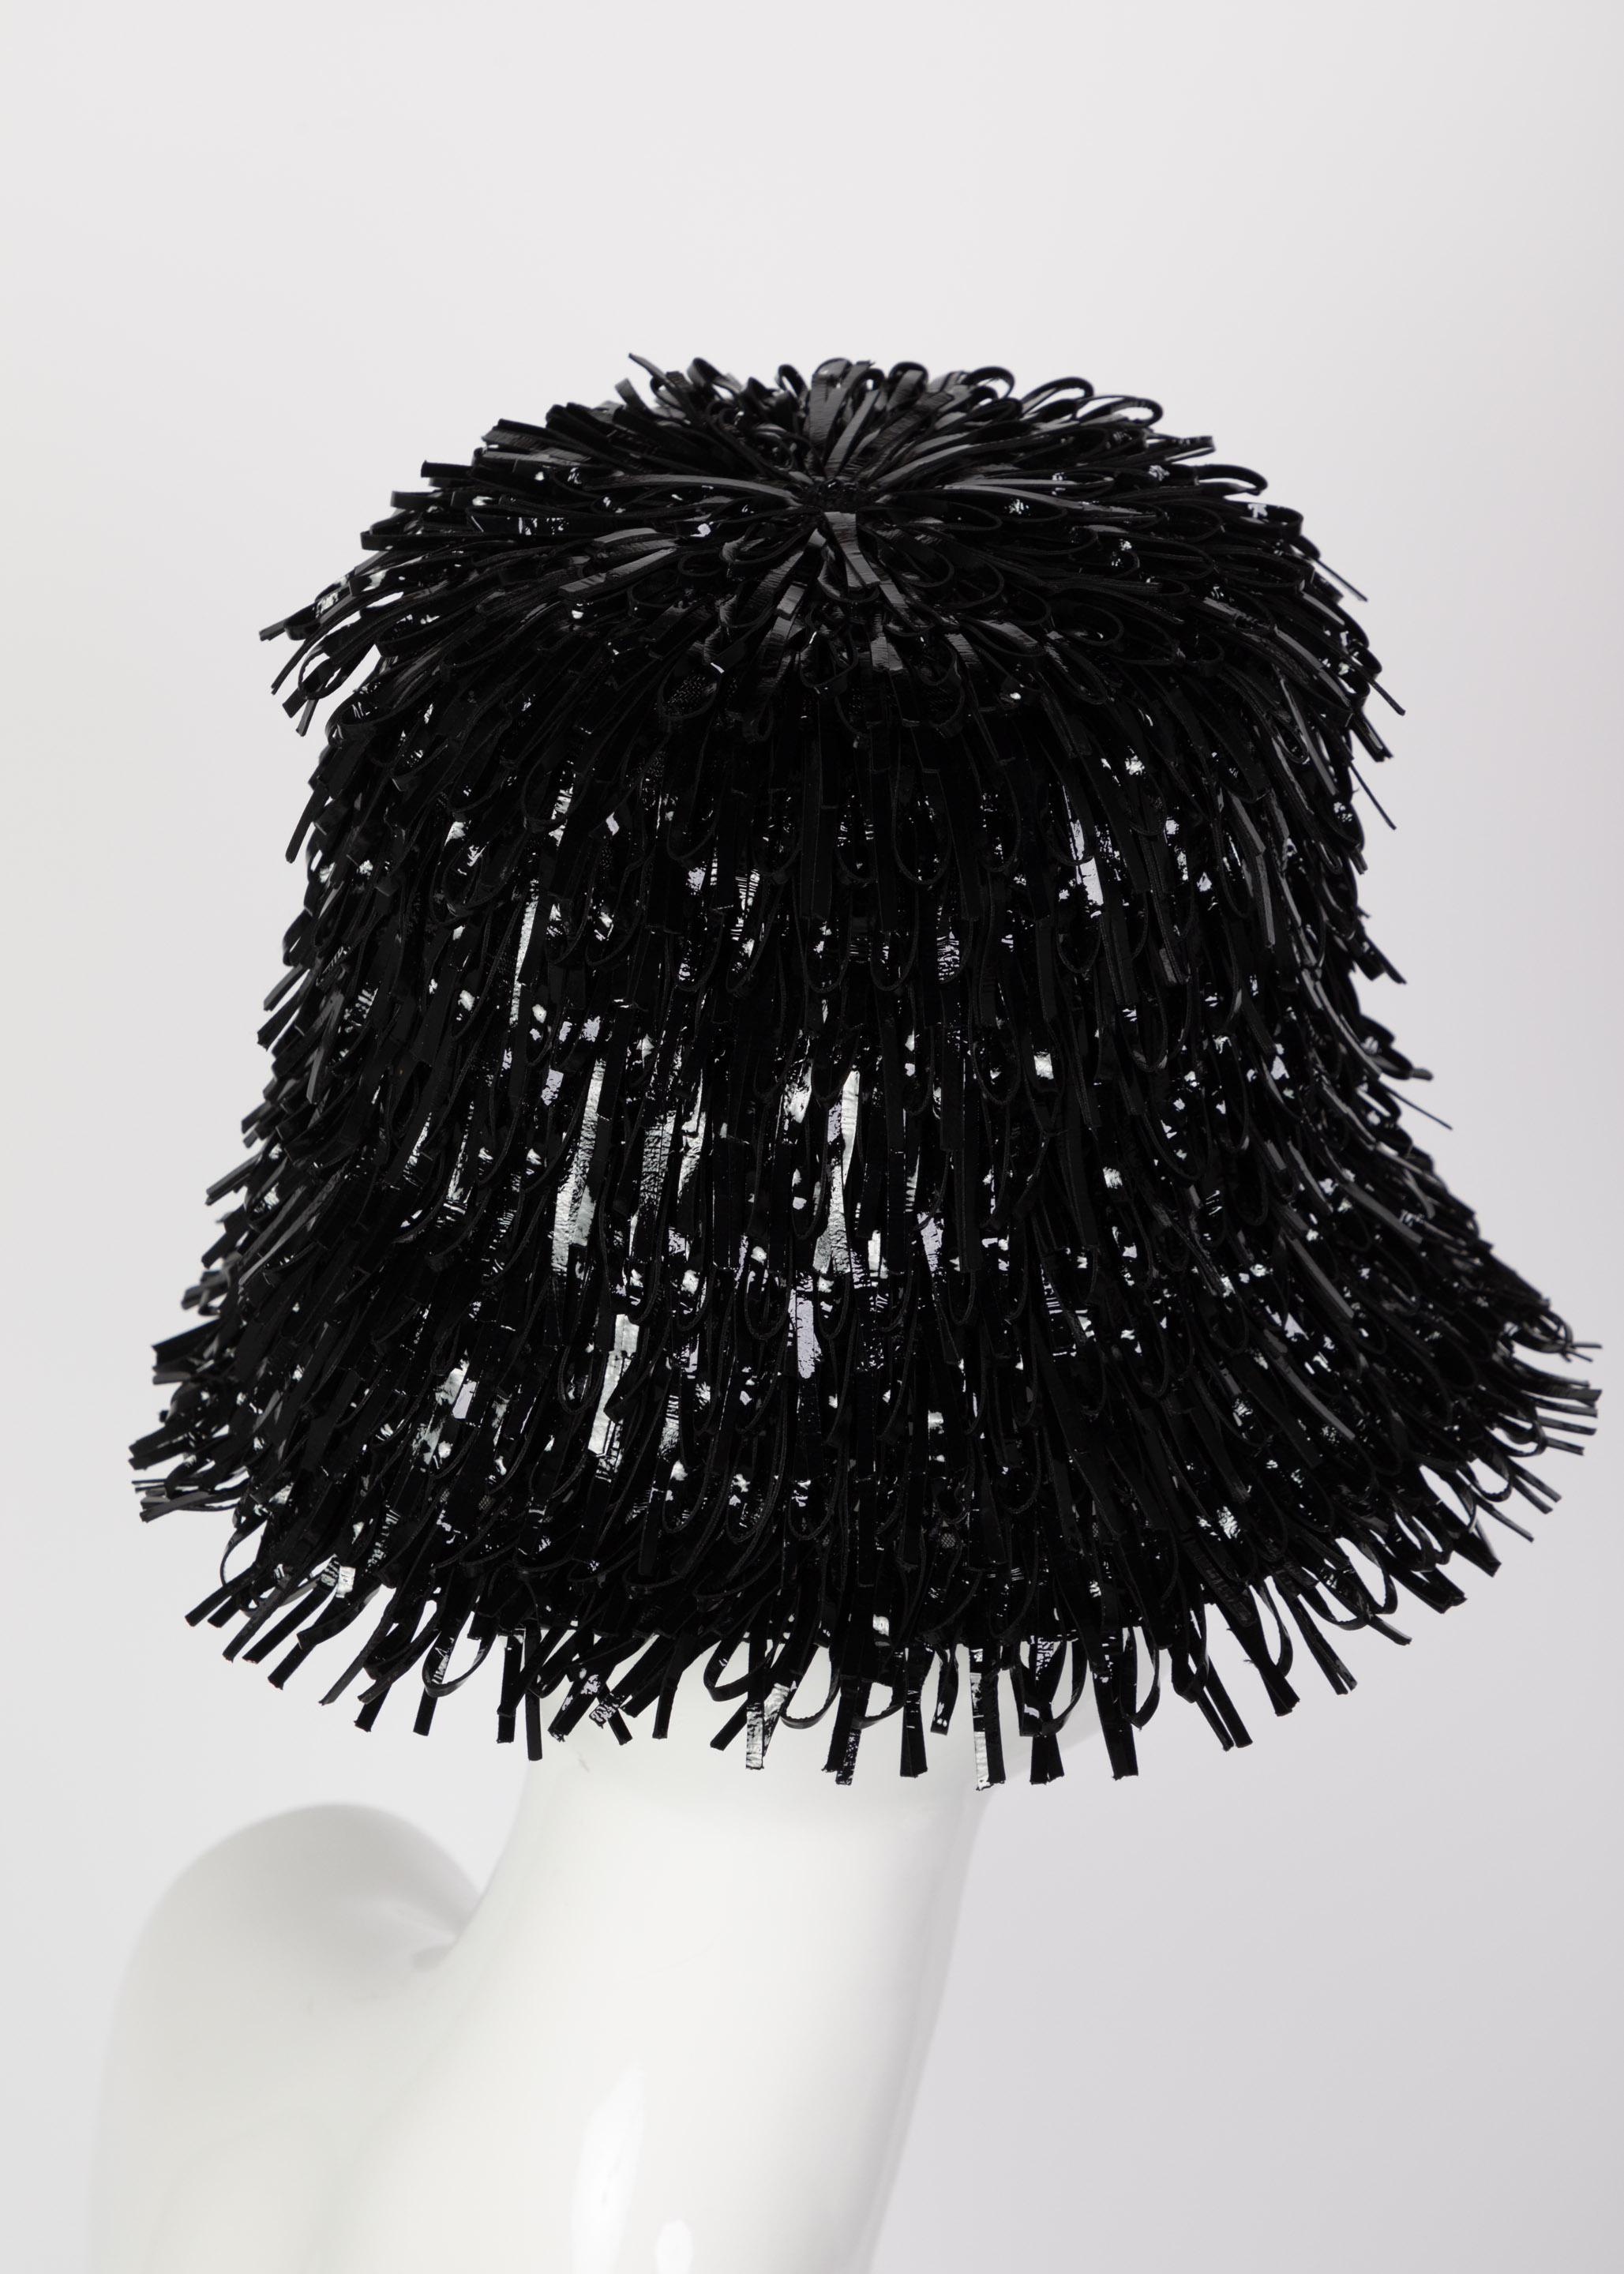 Balenciaga Black Faux Patent Leather Hat Resort 2014 1